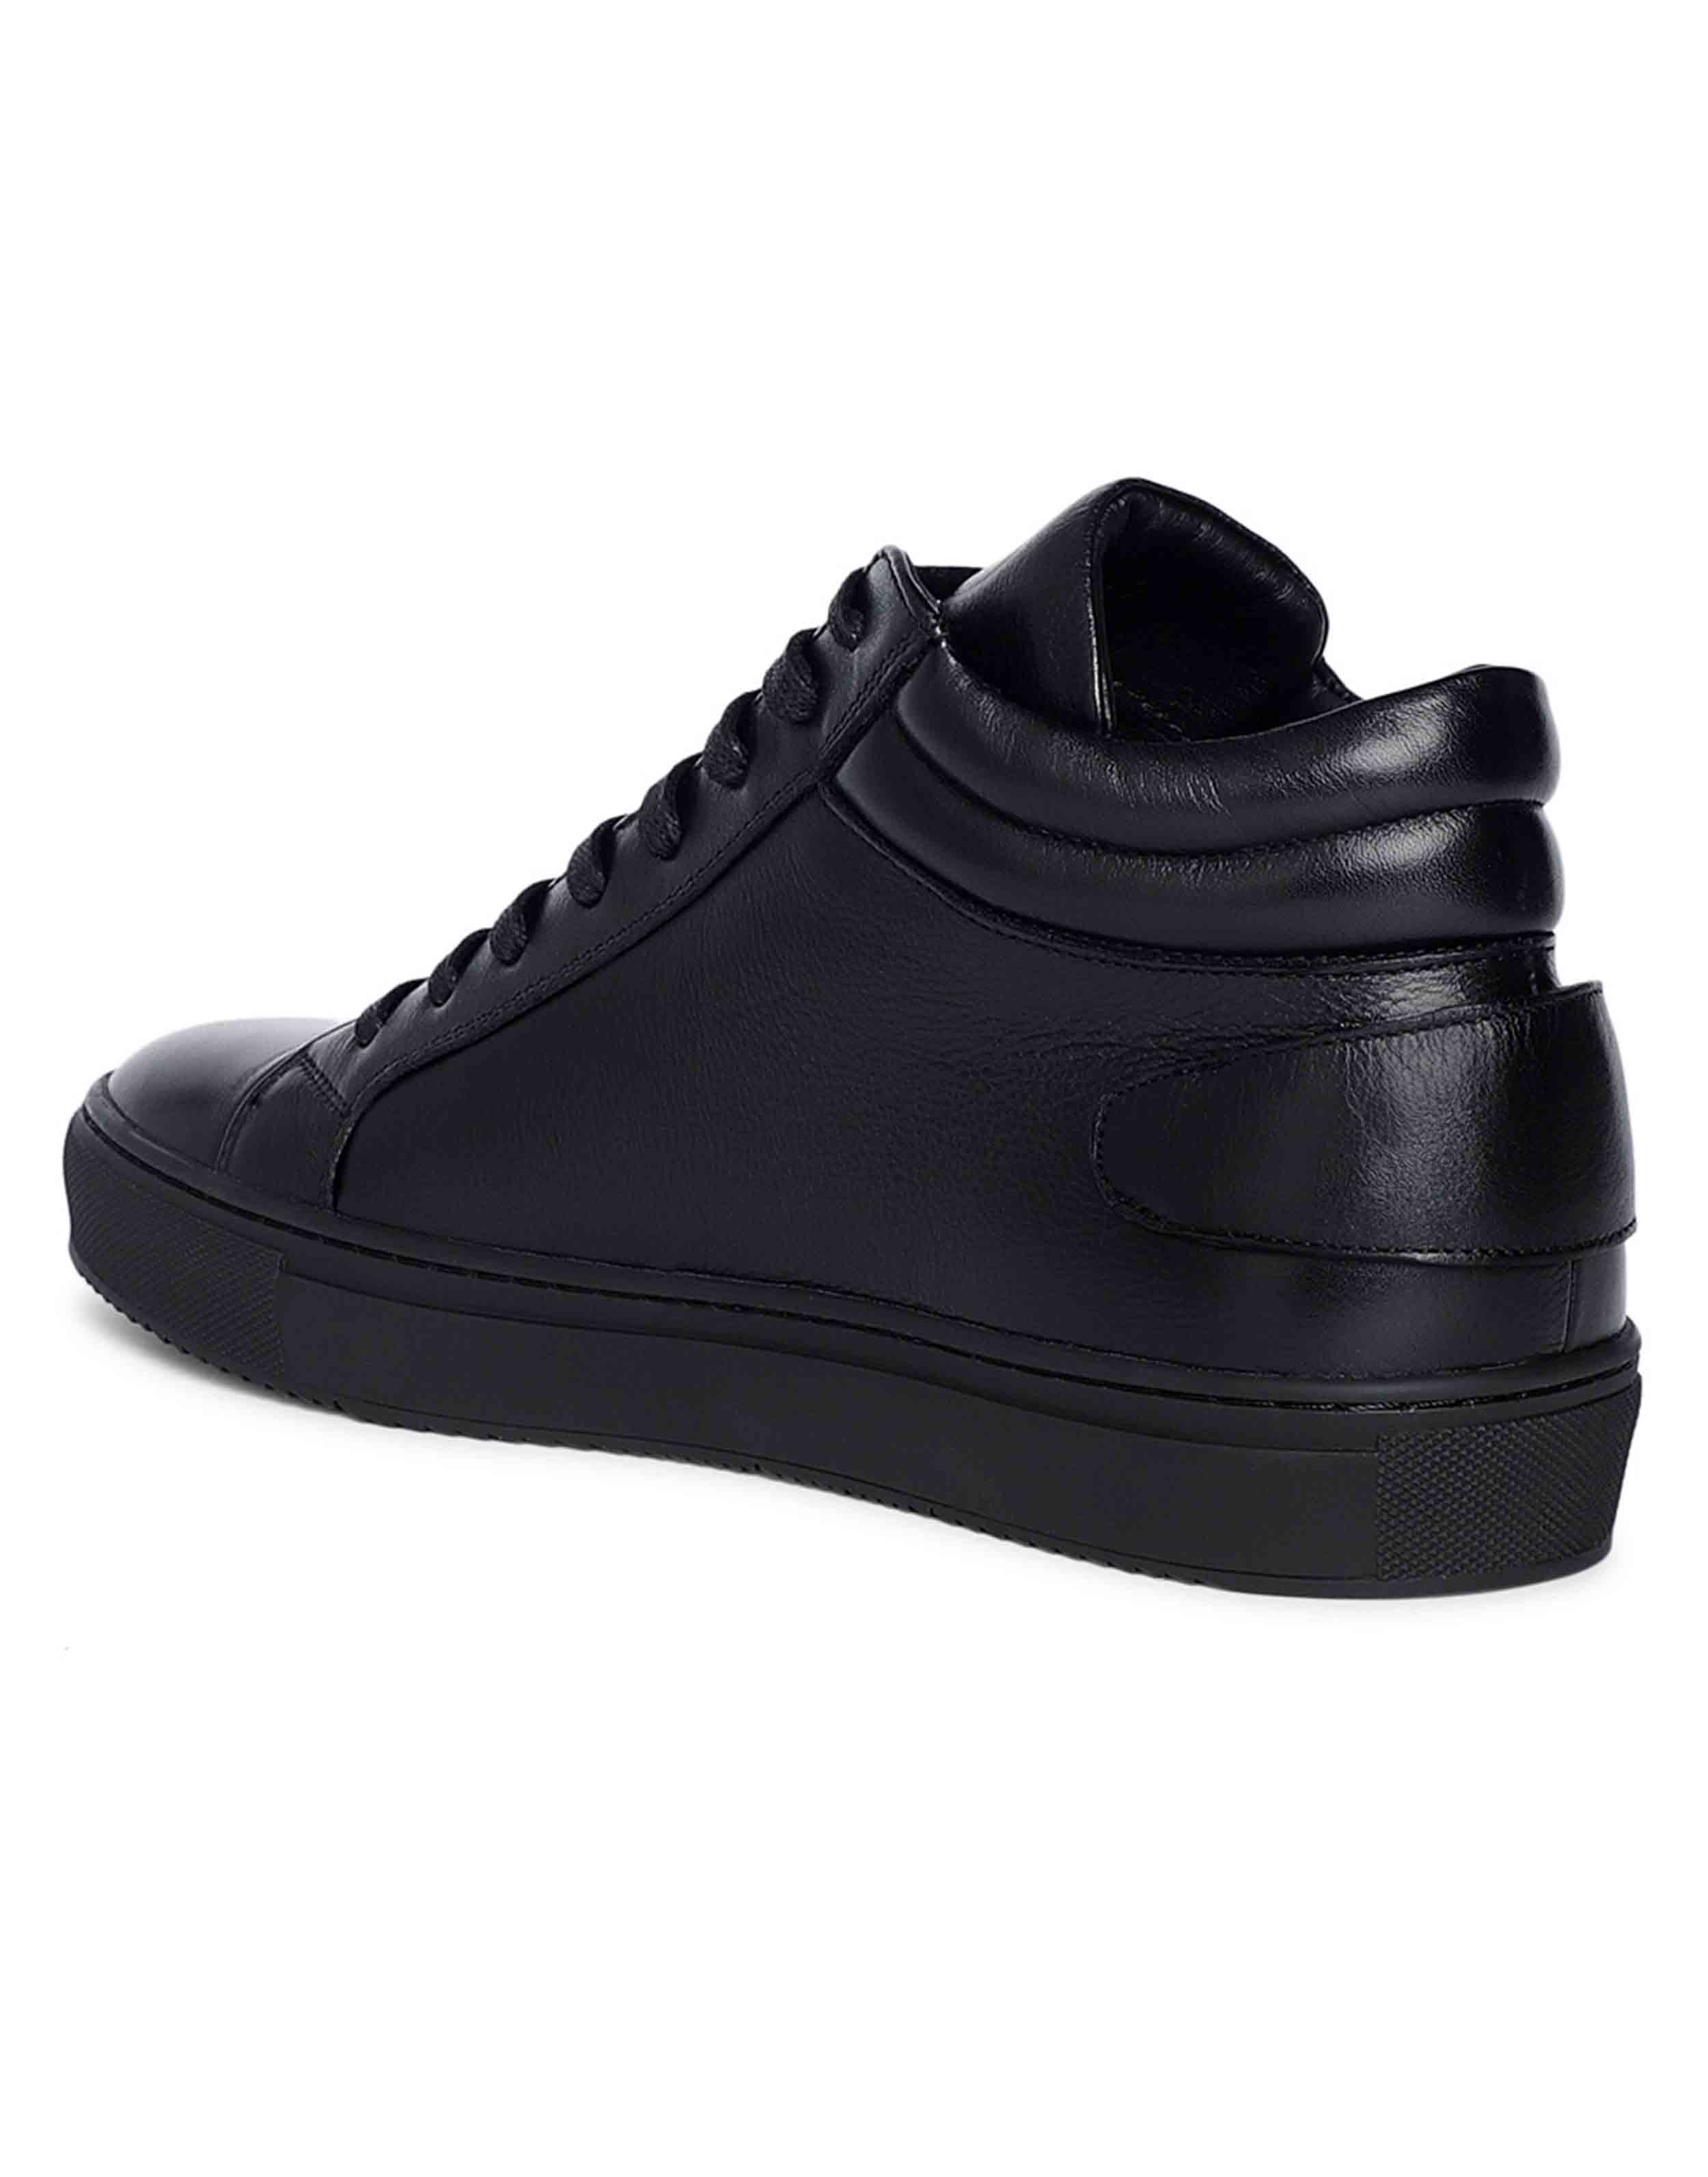 Buy Grey Casual Shoes for Men by Heel & Buckle London Online | Ajio.com